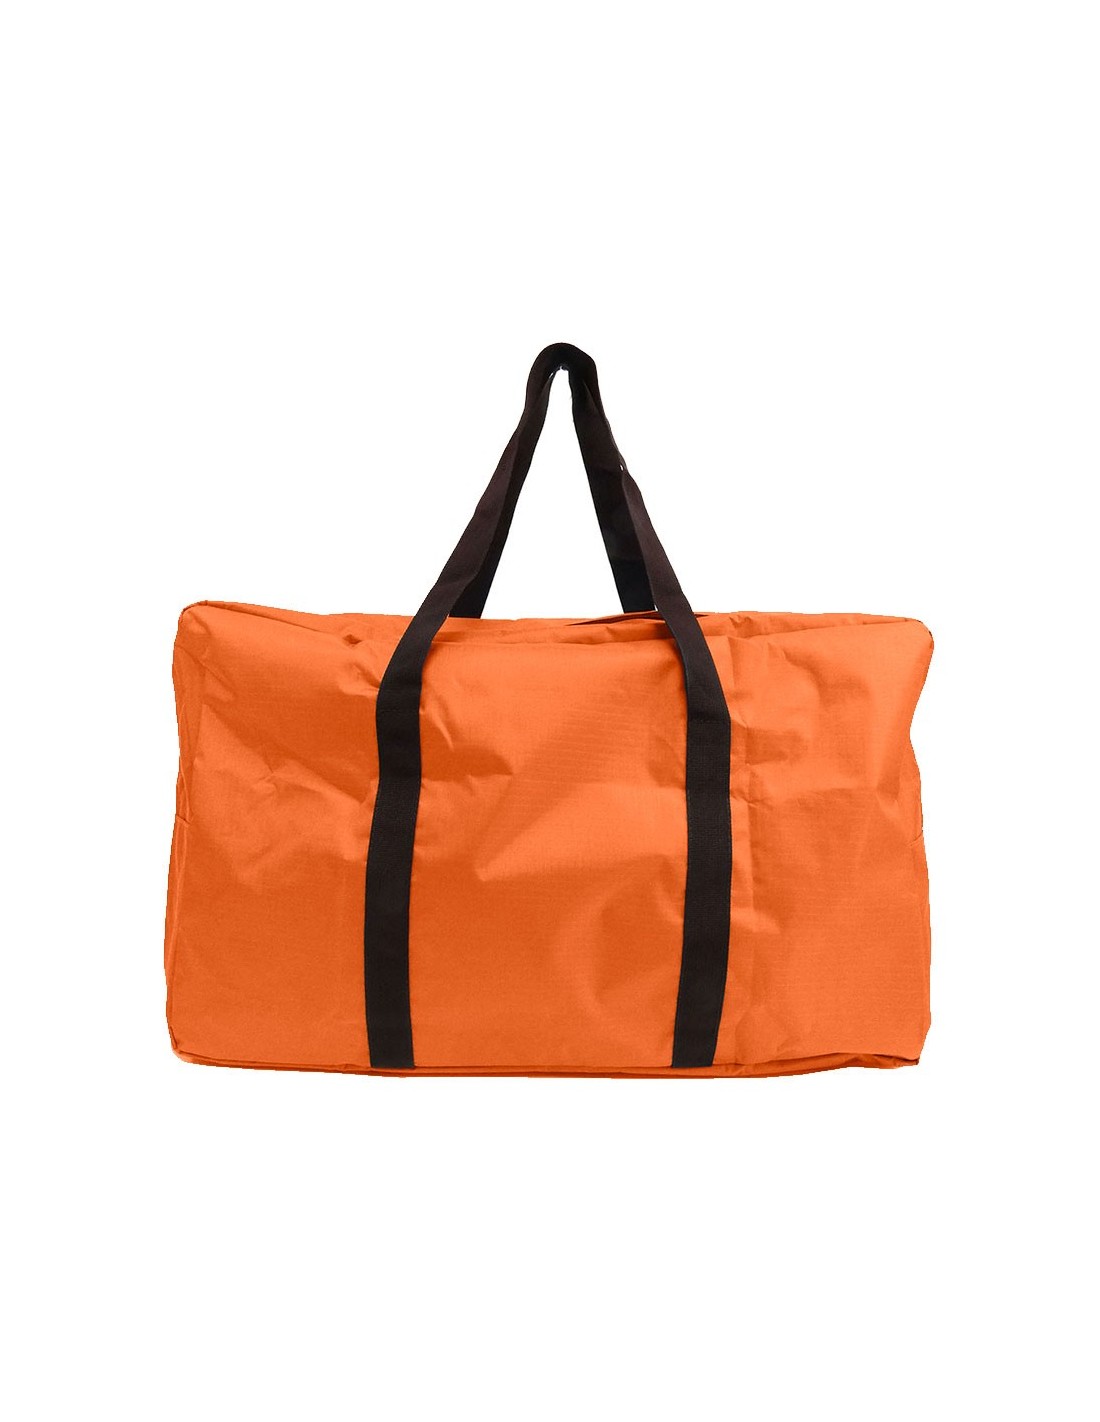 Bolso plegable viaje (naranja) / Folding orange travel bag